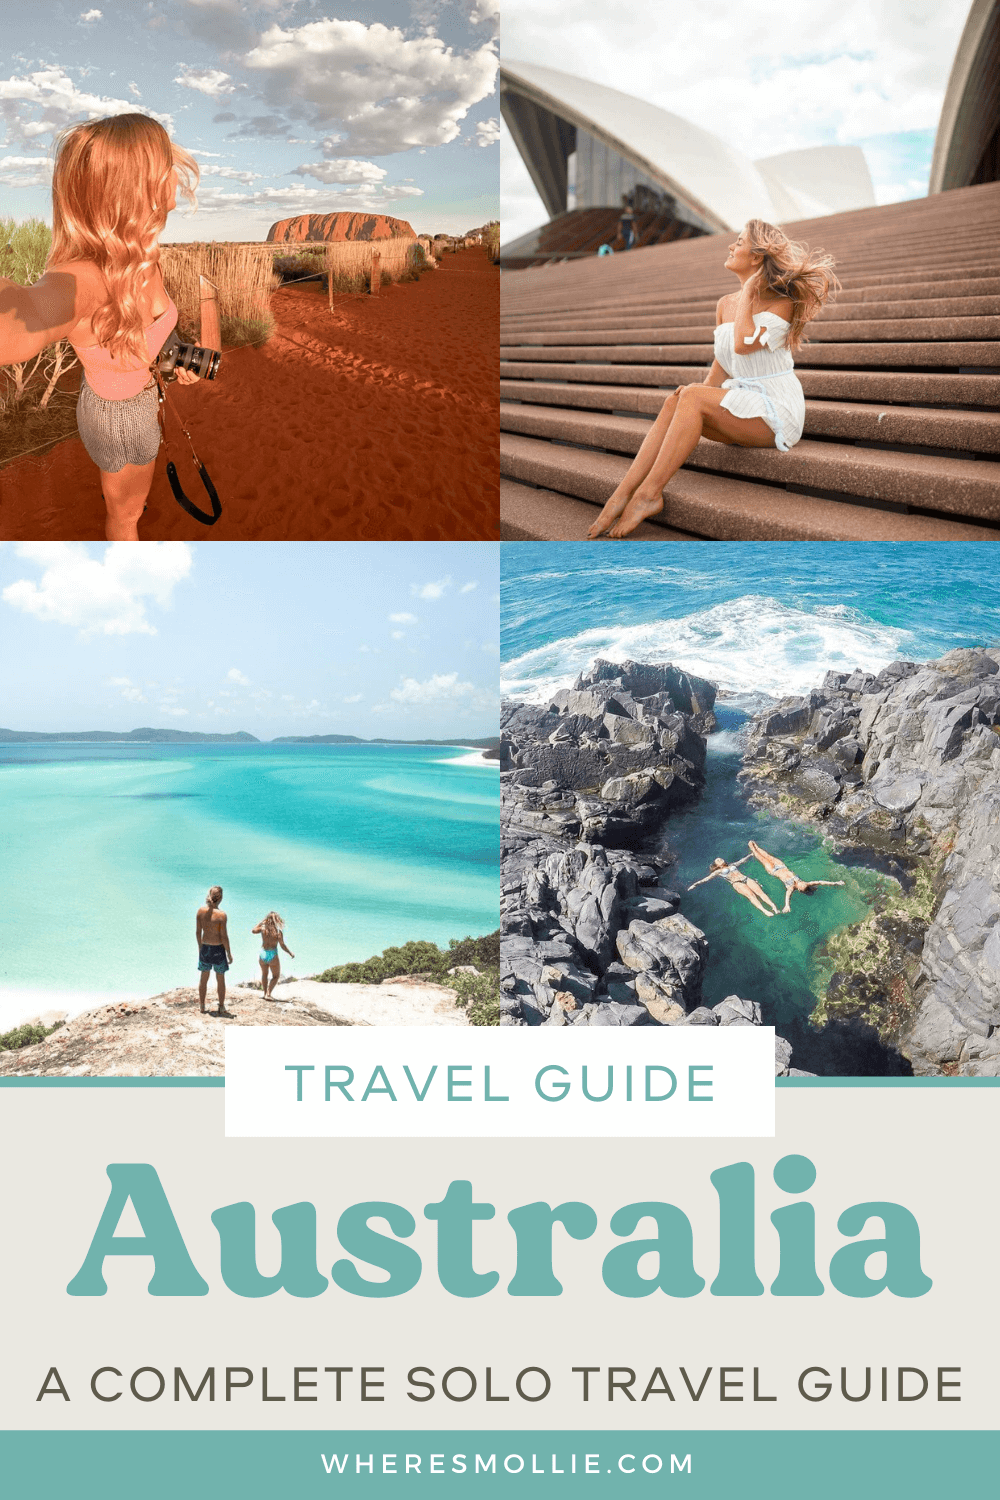 A complete guide to solo travel in Australia